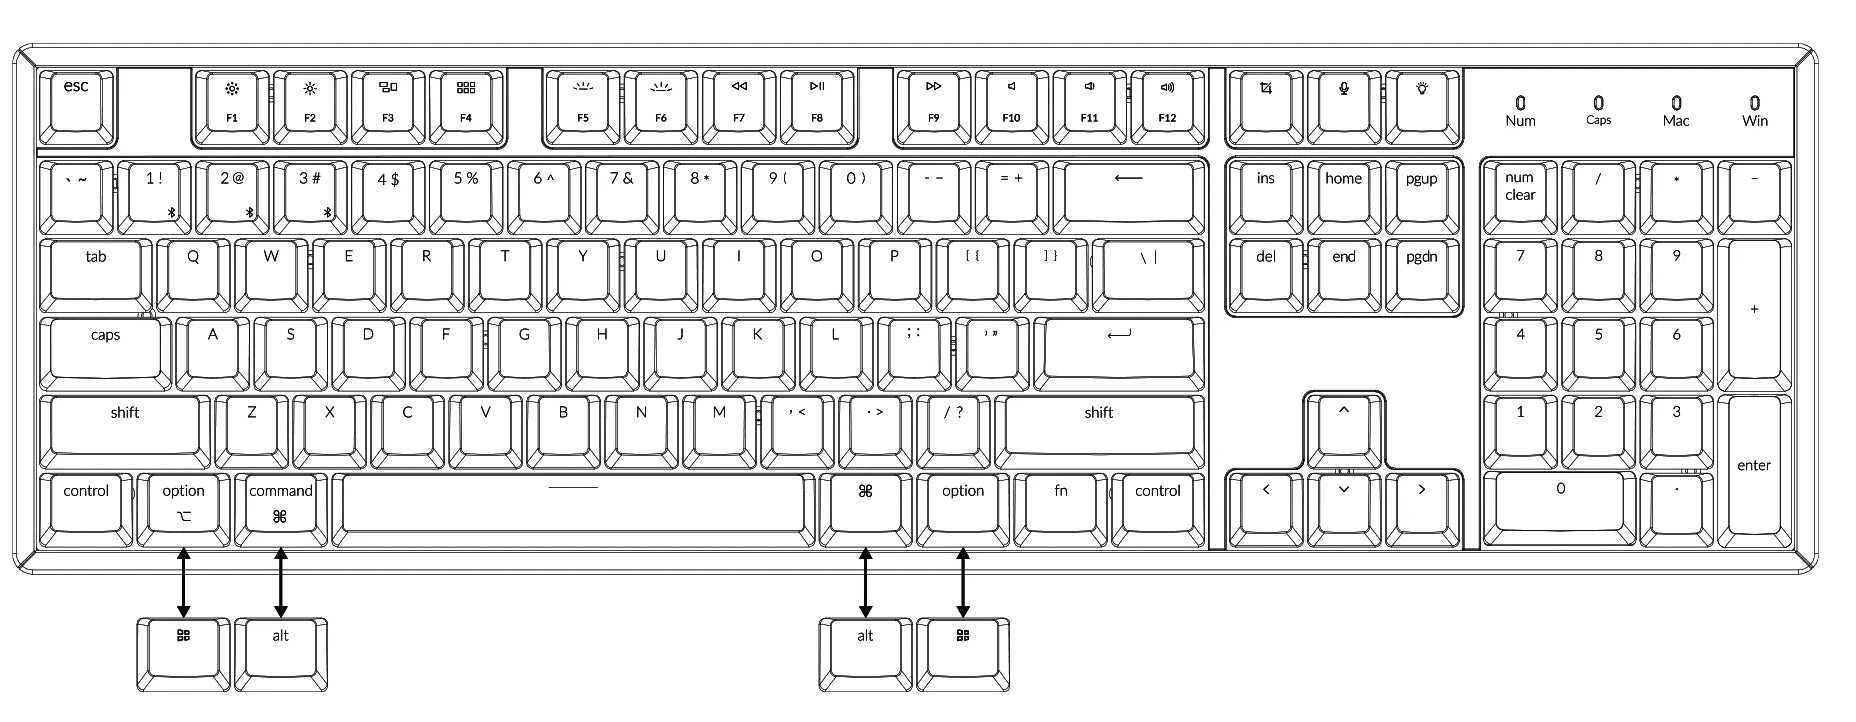 Keychron K10 full size wireless mechanical keyboard for Mac Windows - red blue brown Gateron mechanical switch